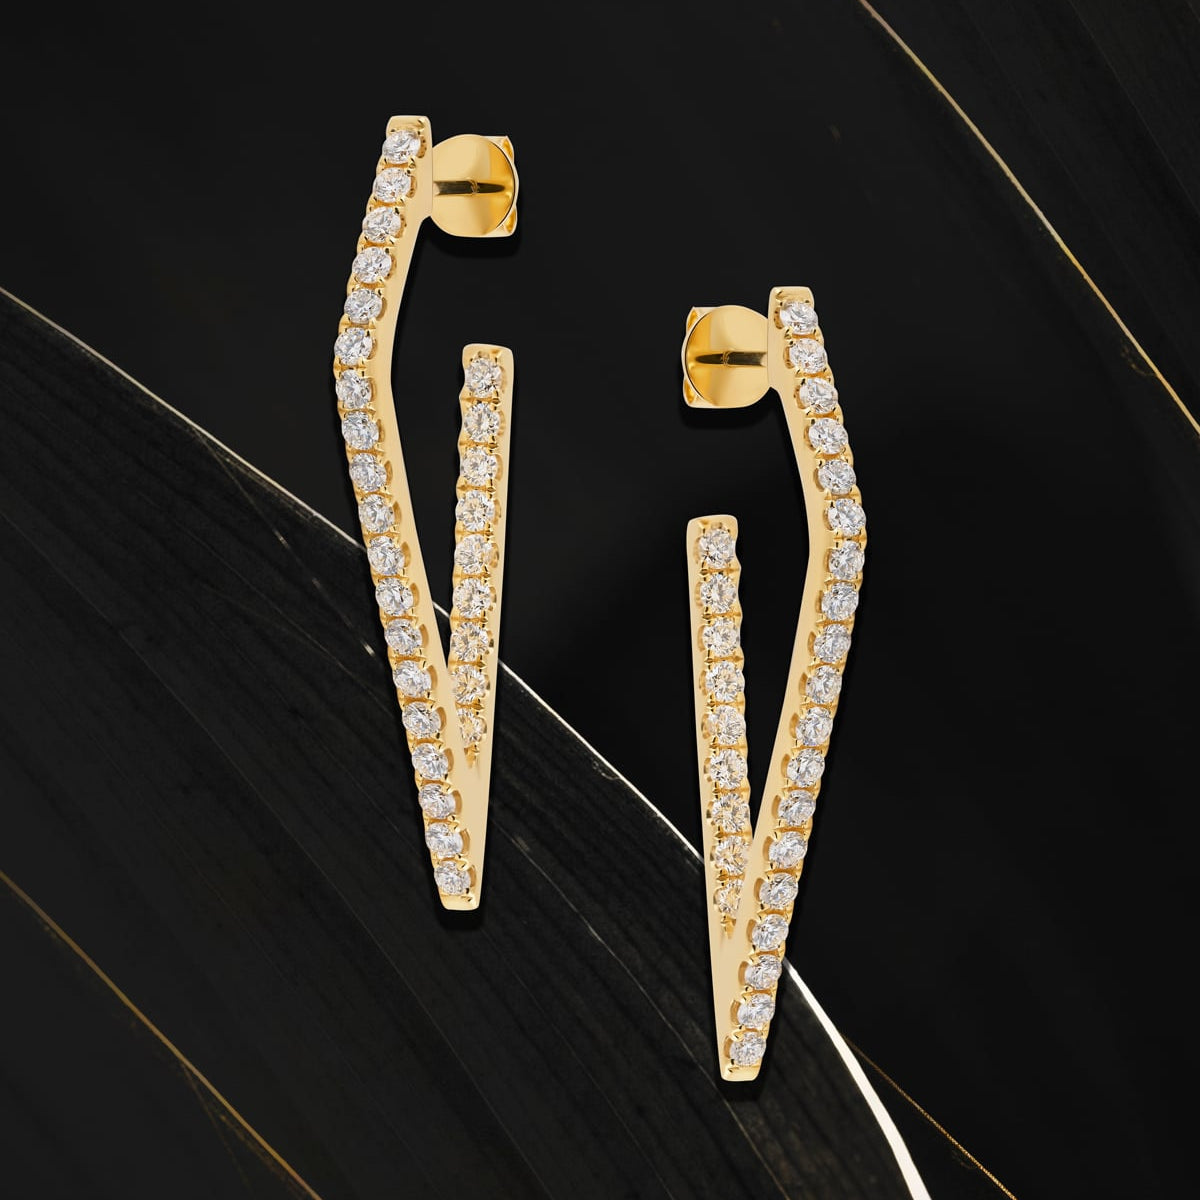 Diamond earrings available at LeGassick Diamonds & Jewellery Gold Coast, Australia.